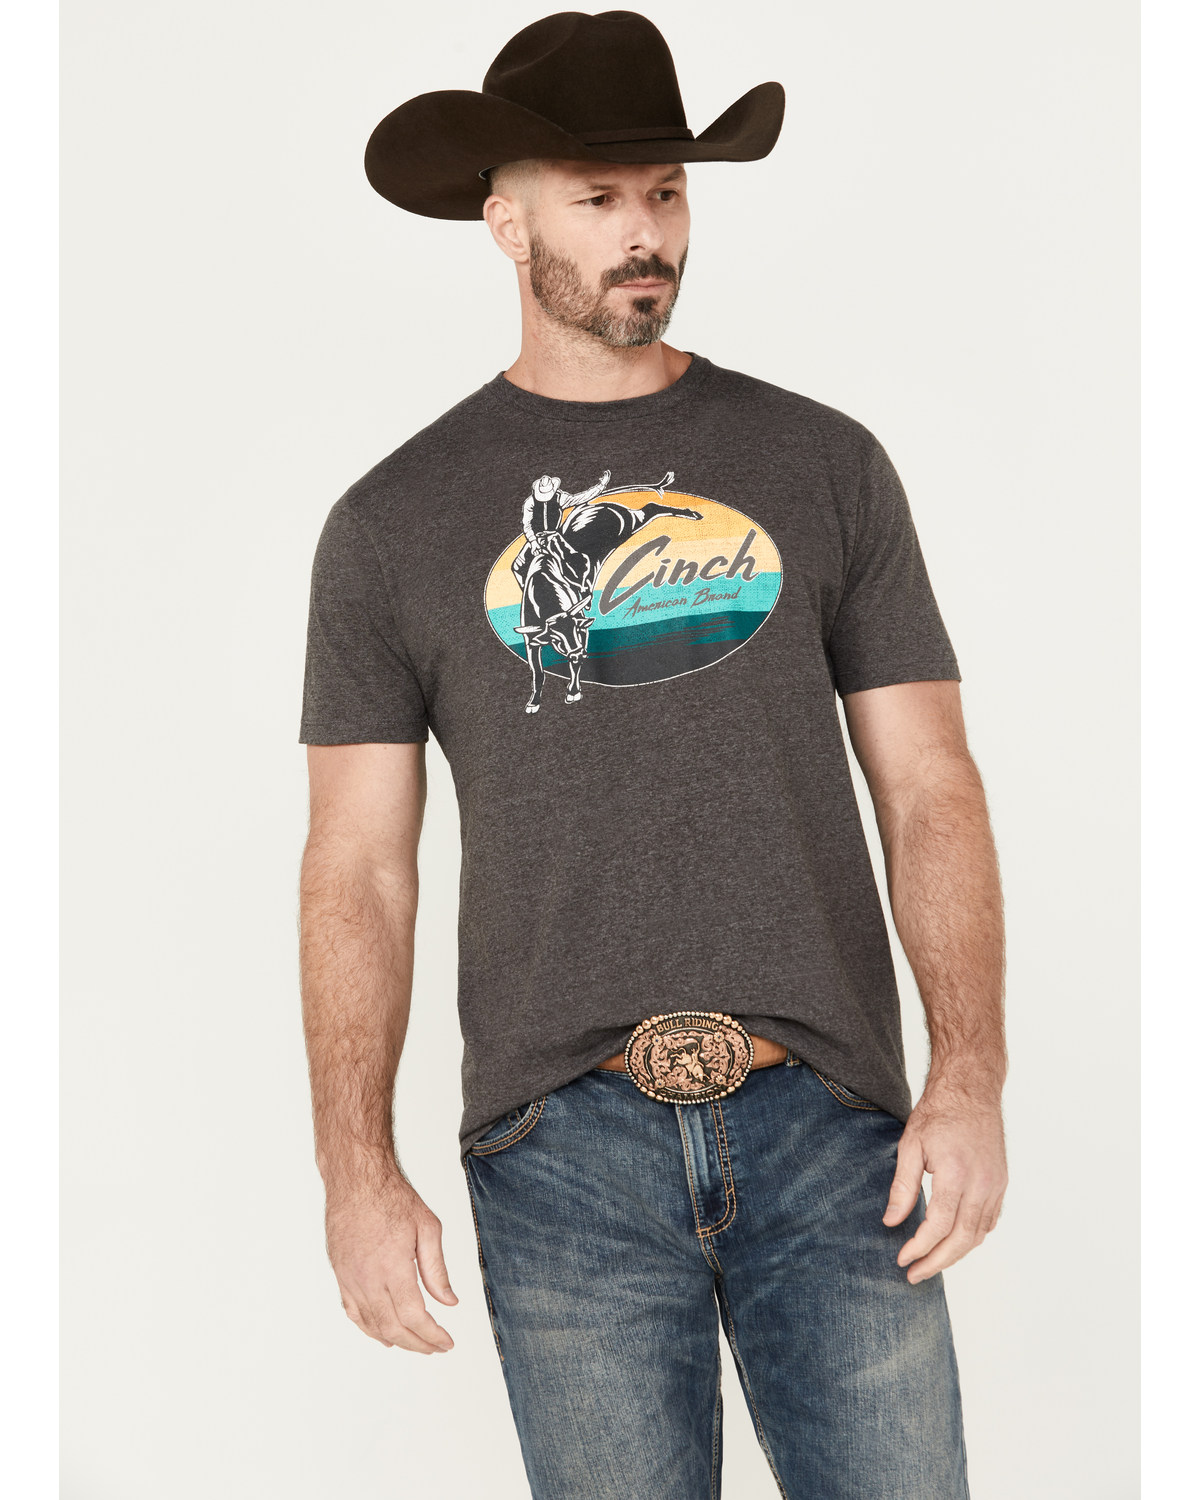 Cinch Men's Cowboy Short Sleeve Graphic T-Shirt